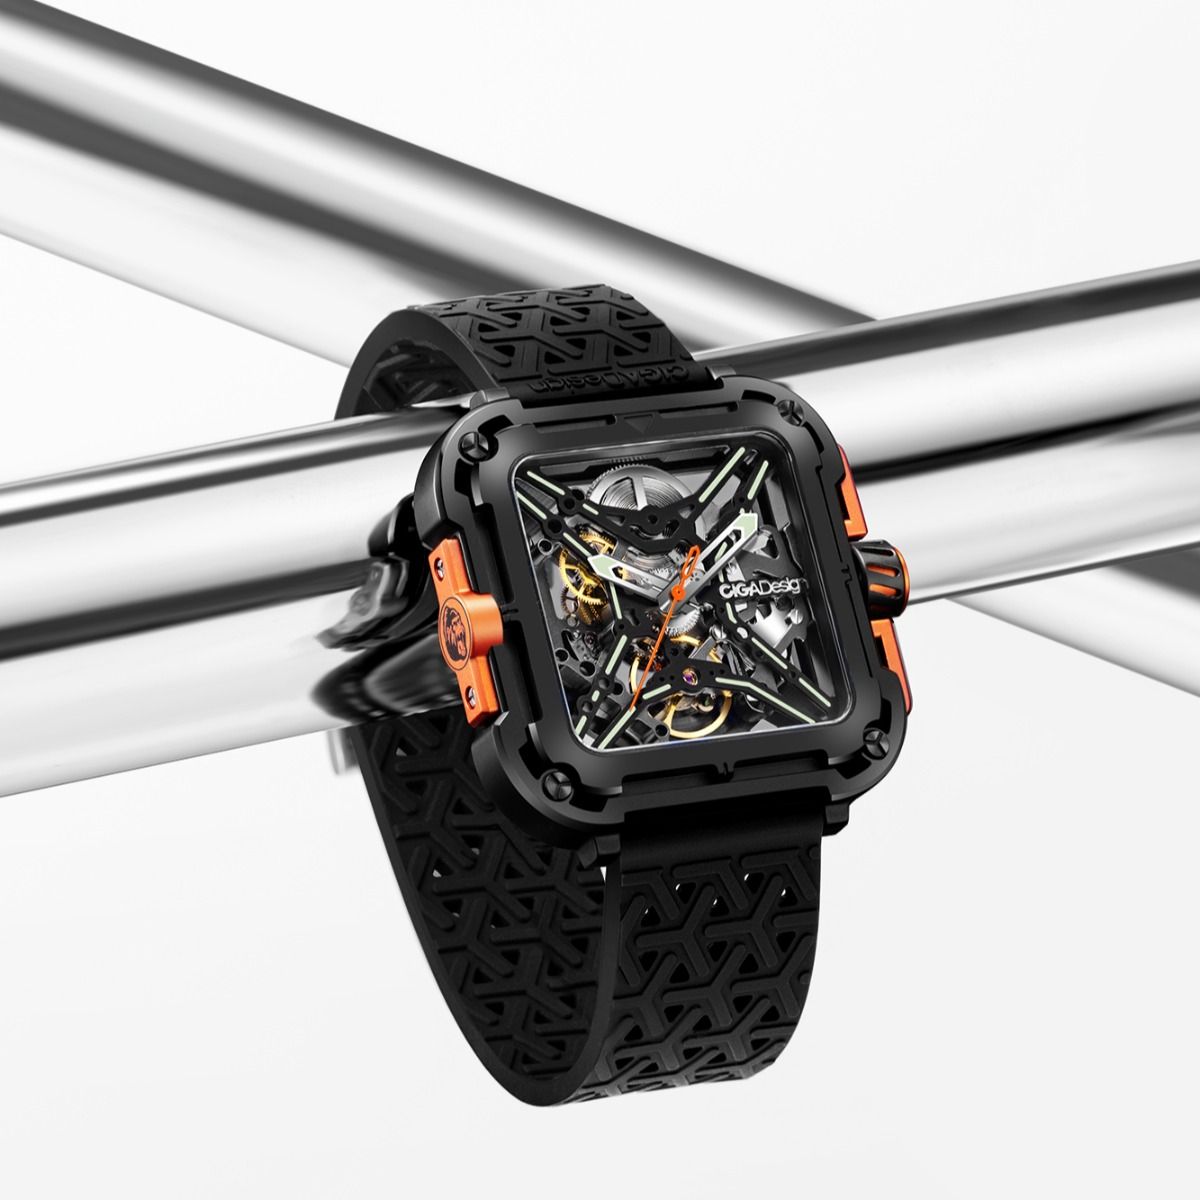 Ciga Design X Series Black & Orange Skeleton Automatic watch